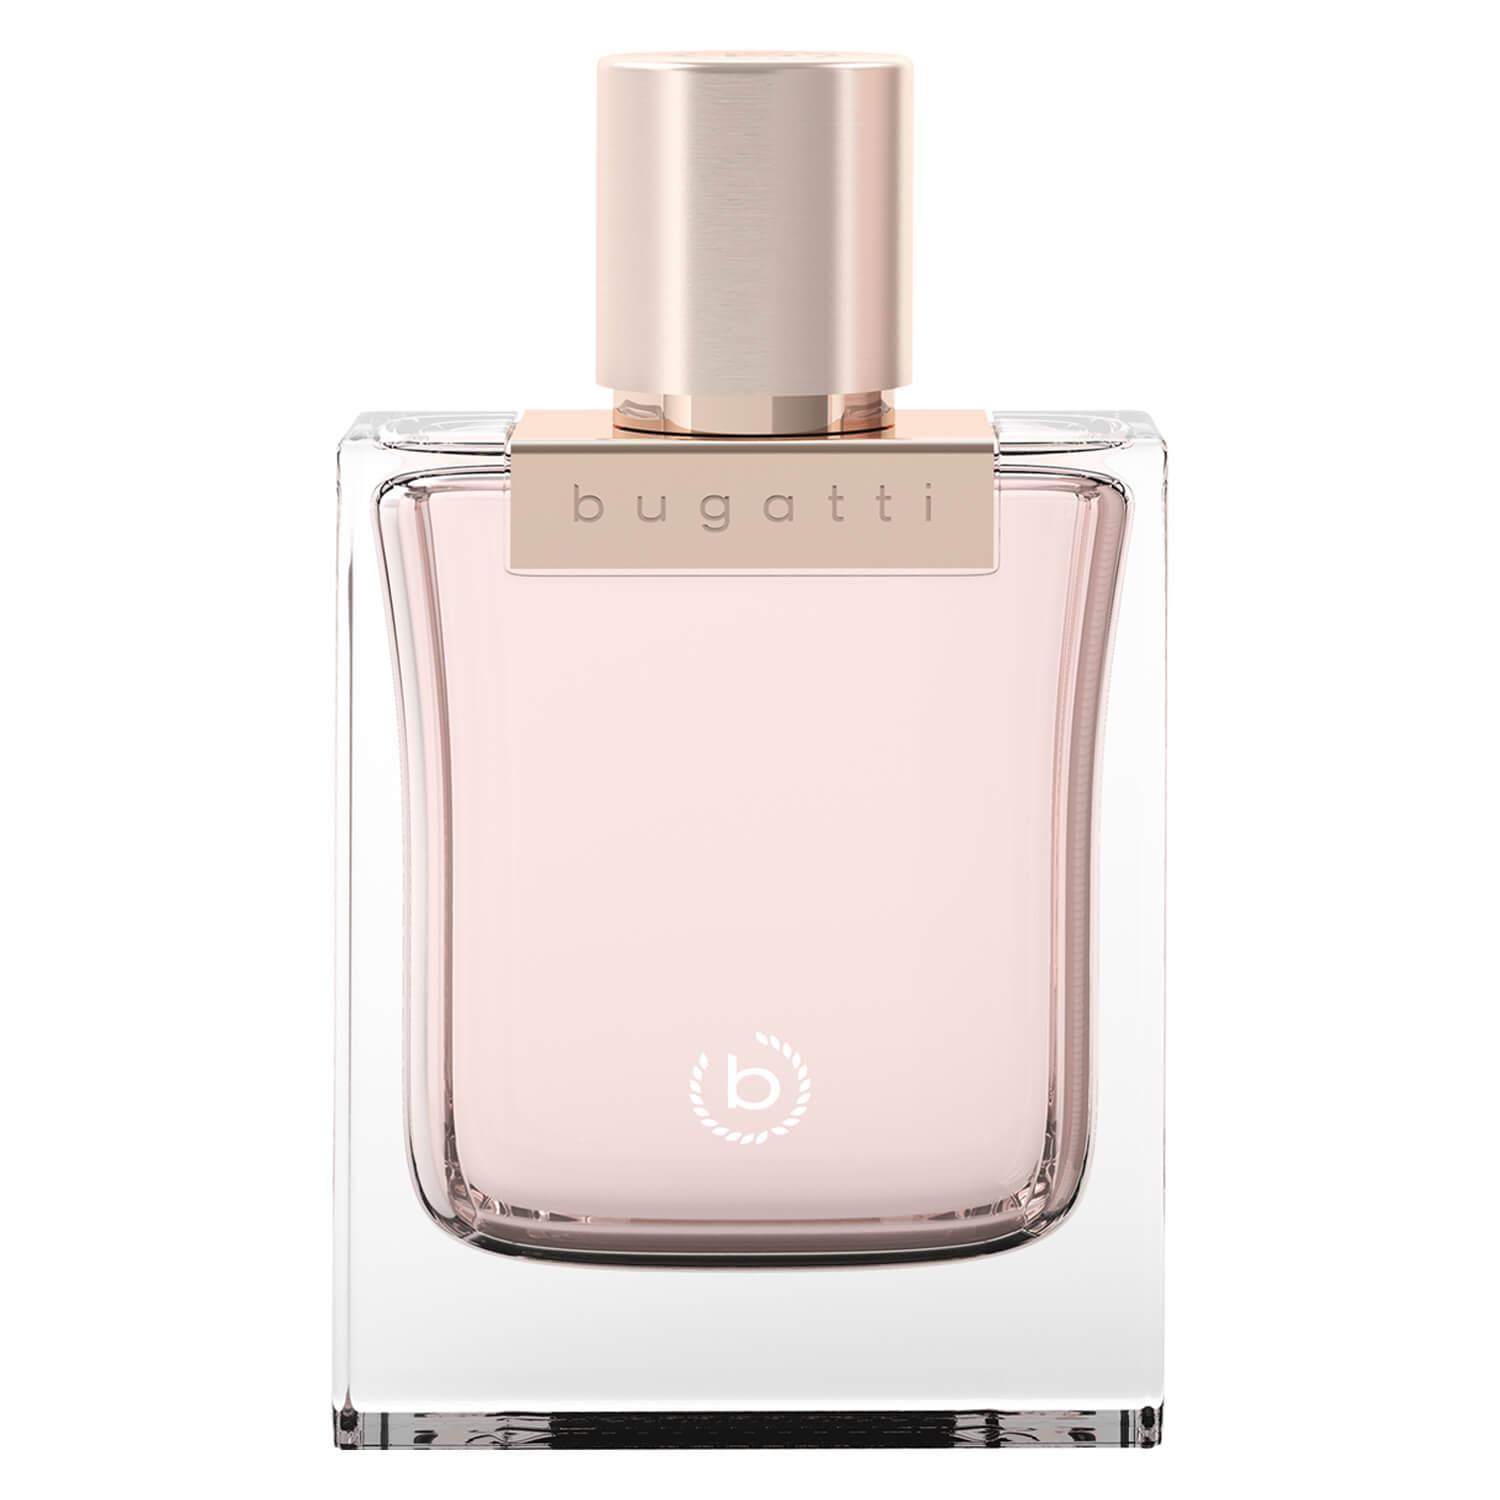 bugatti - Bella Donna Eau de Parfum